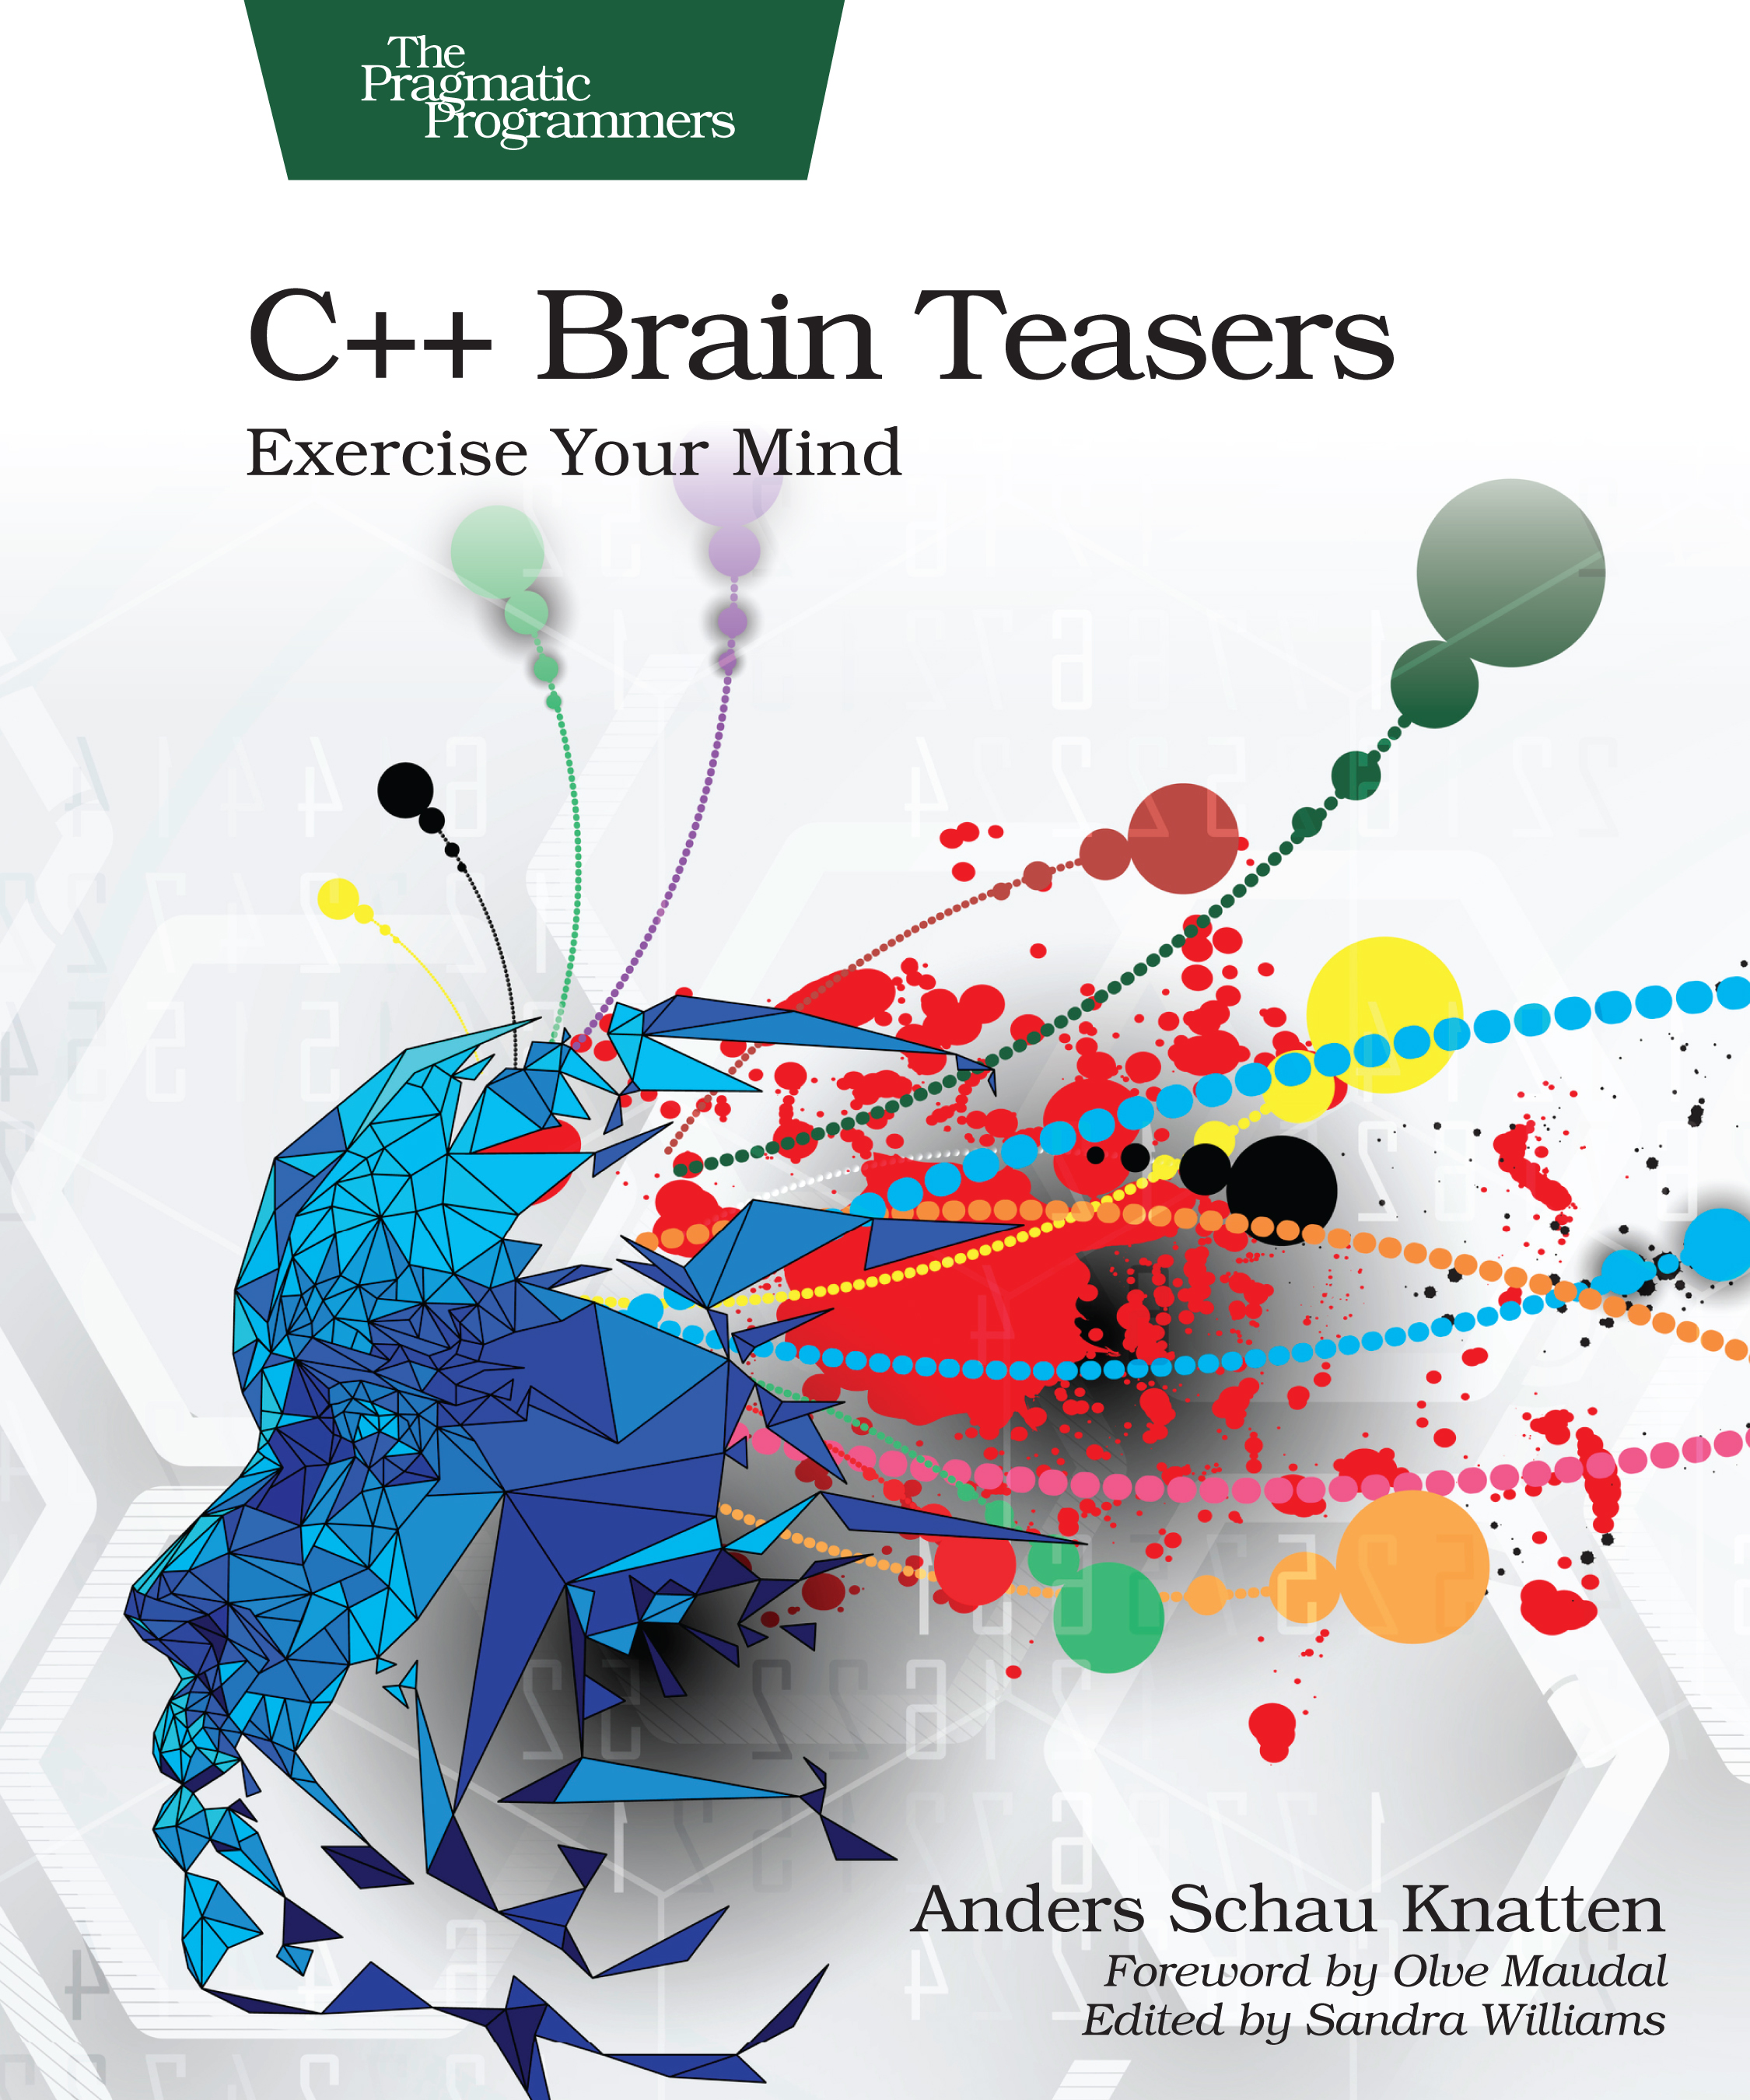 Brain Teaser Brain Teaser, Portátil Educativo Inteligente Brain